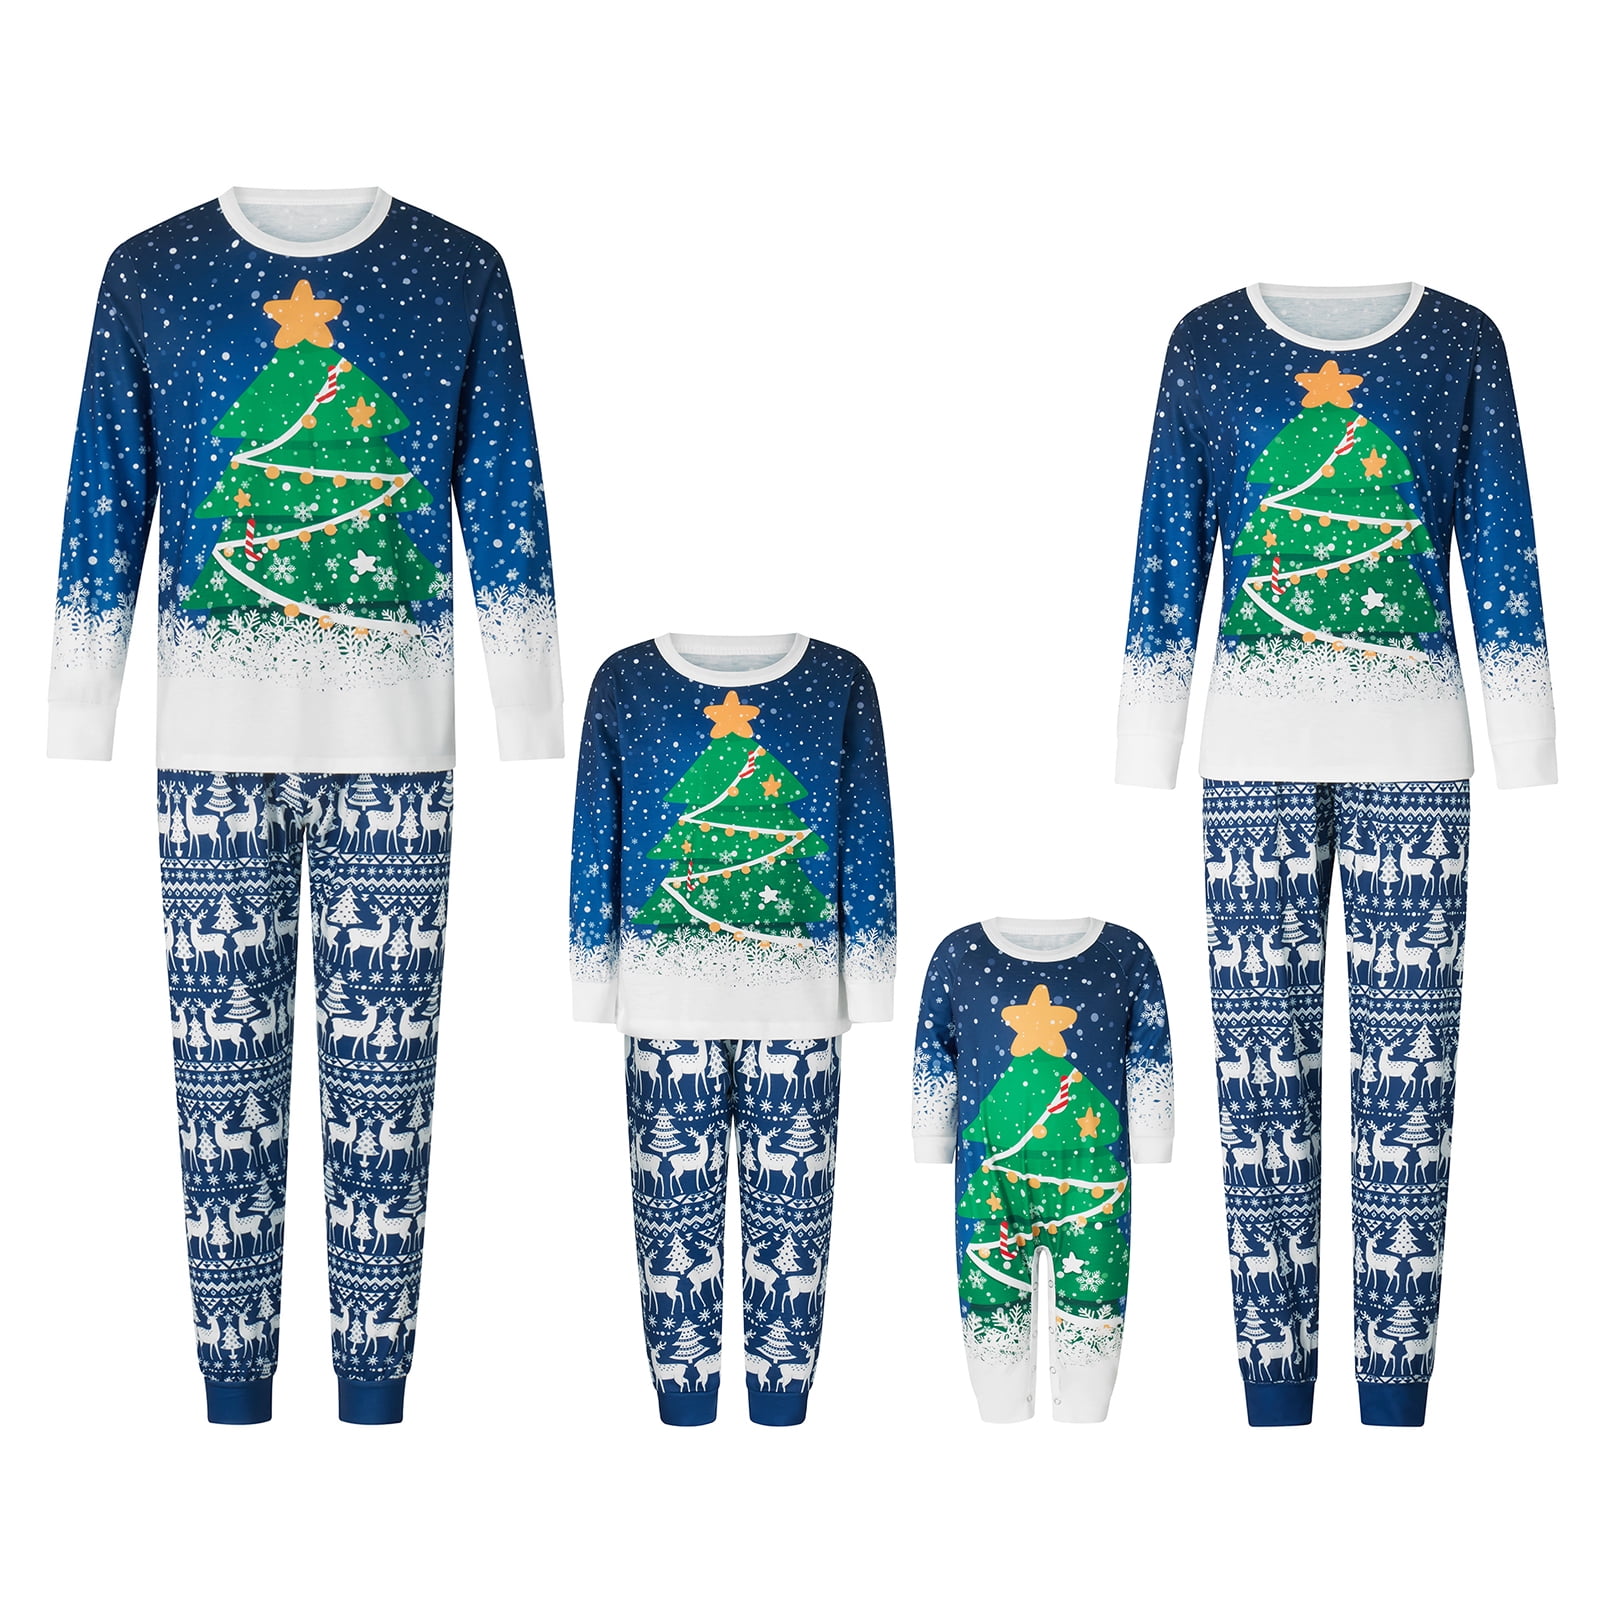 Sunisery Christmas Pajamas Matching Family Sets, Matching Sets